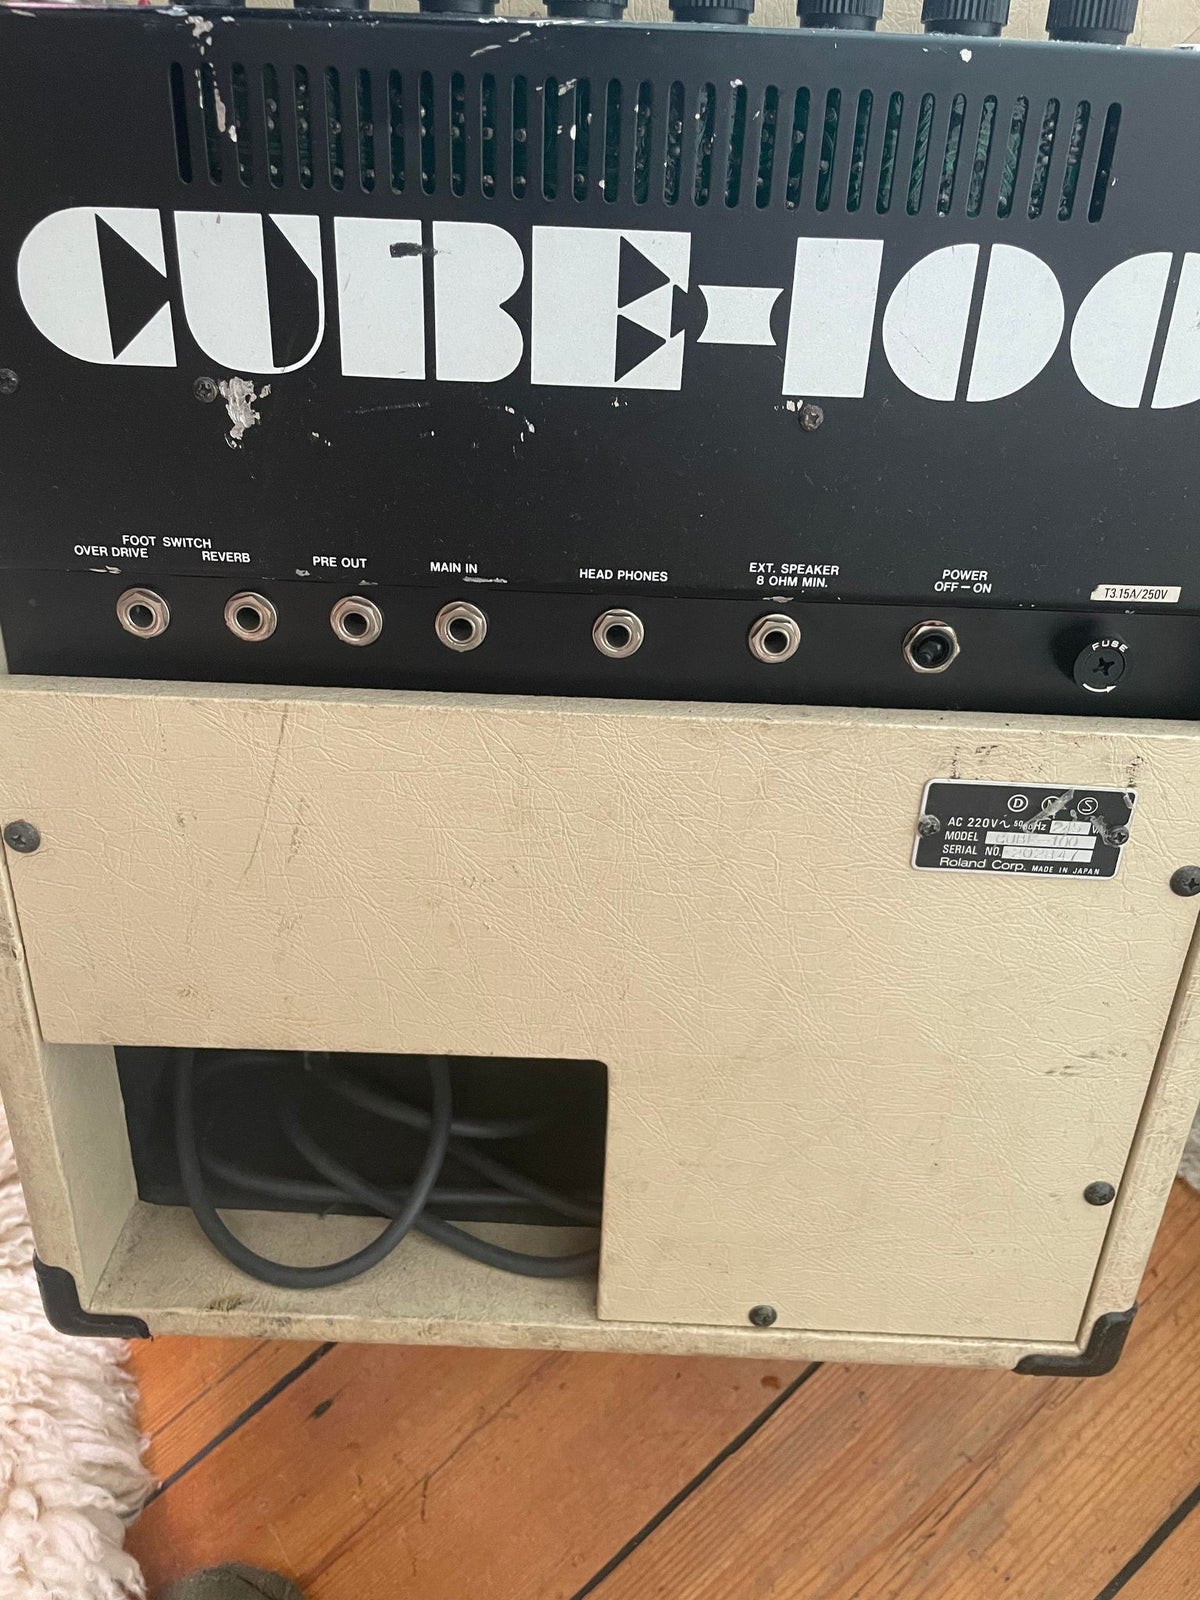 Guitarcombo, Roland Cube-100